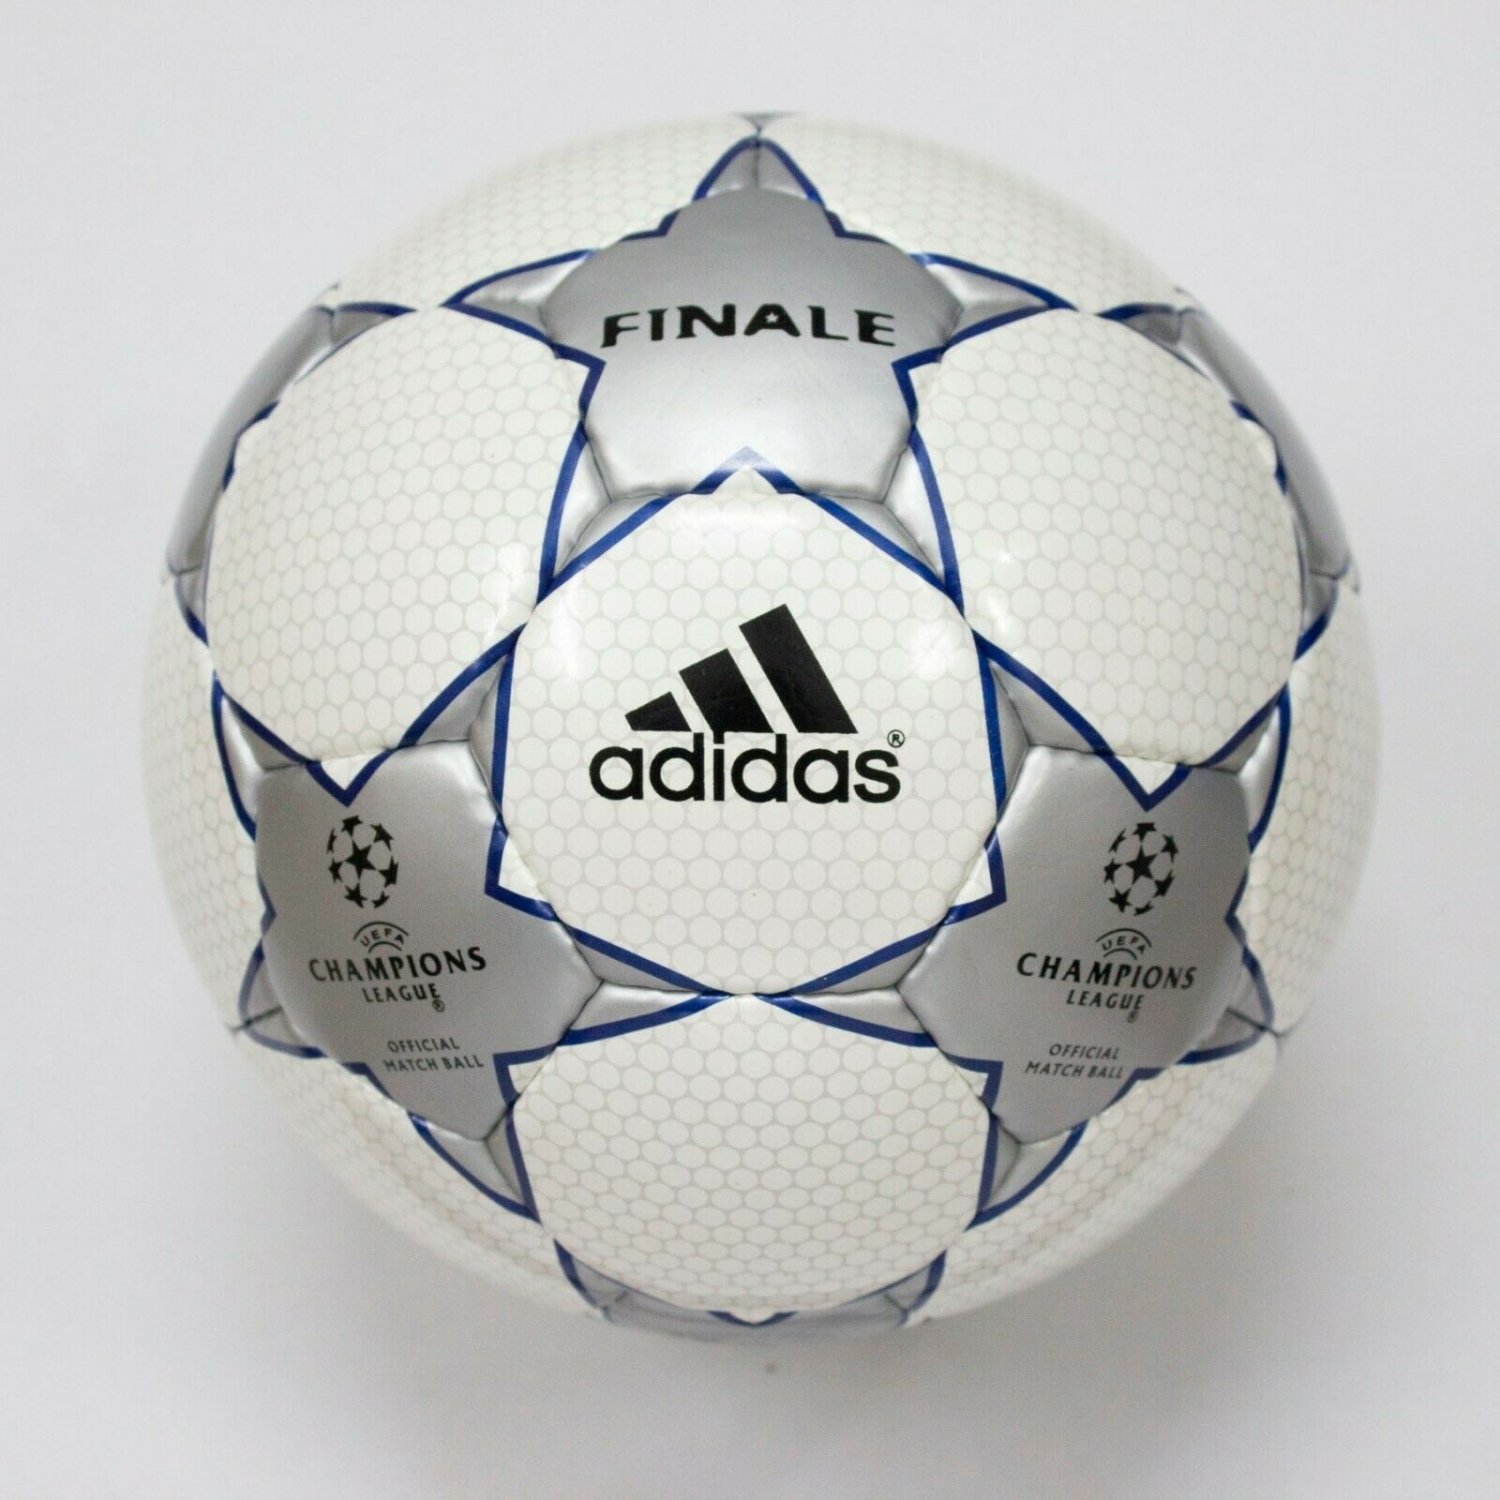 ADIDAS FINALE SOCCER | GRAY STAR MATCH BALL | UEFA CHAMPIONS LEAGUE | FIFA 2002